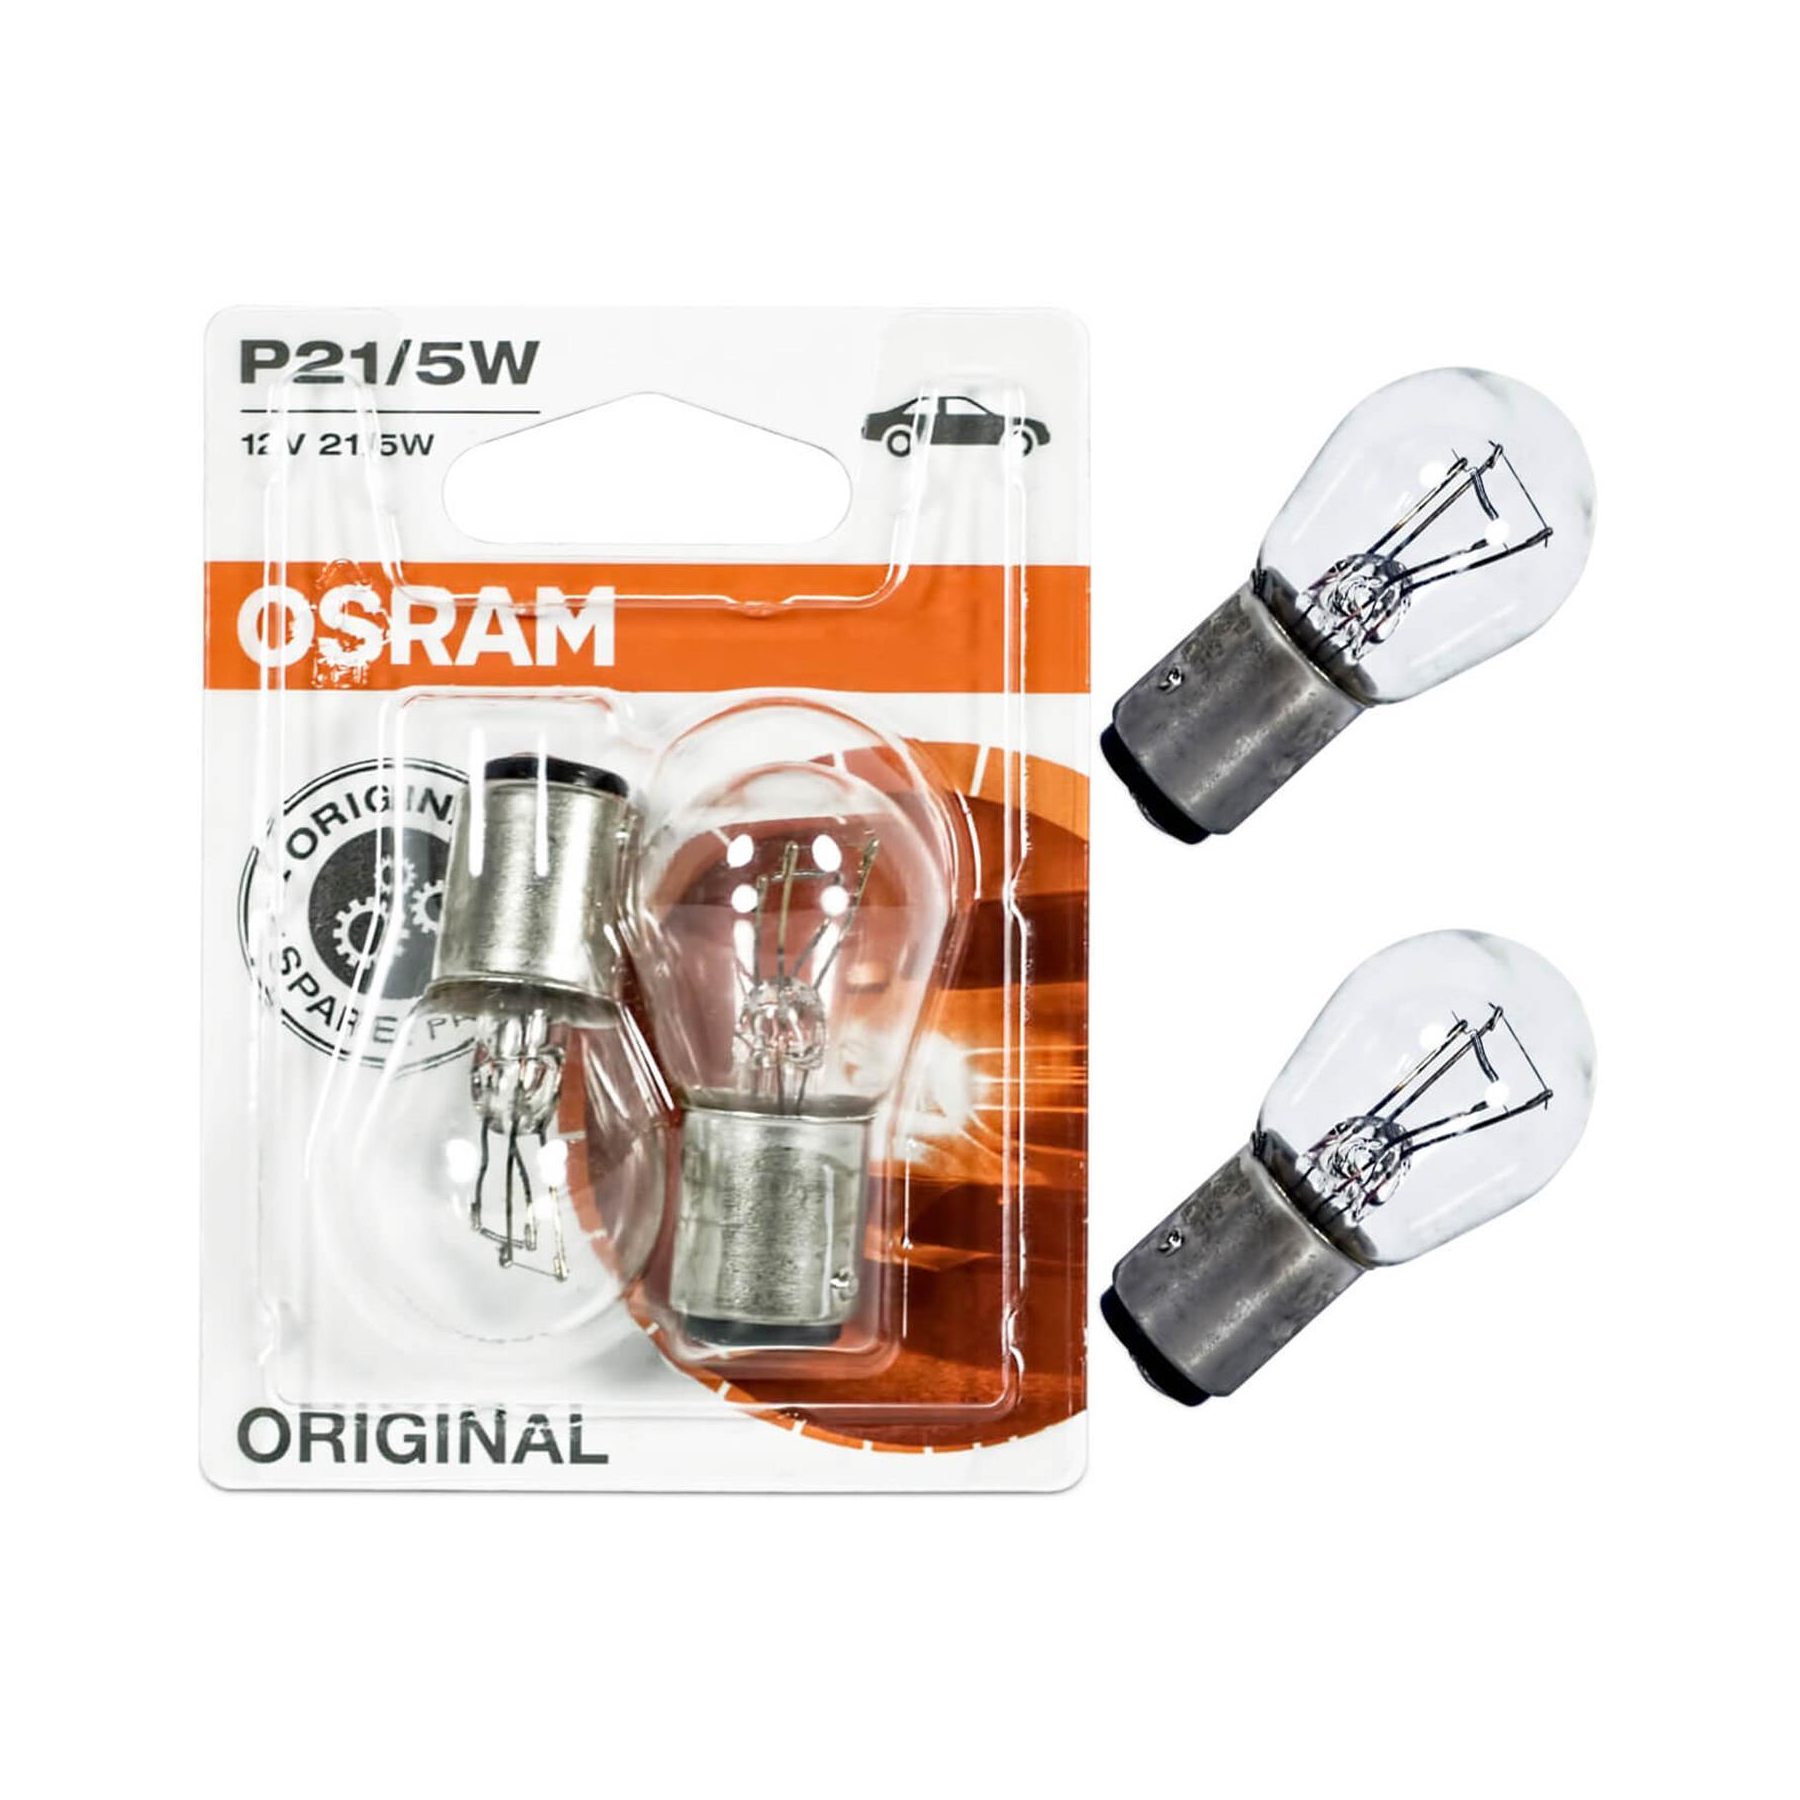 2 x Osram Original Line 7528-02B P21/5W signal lamps, 8,43 €